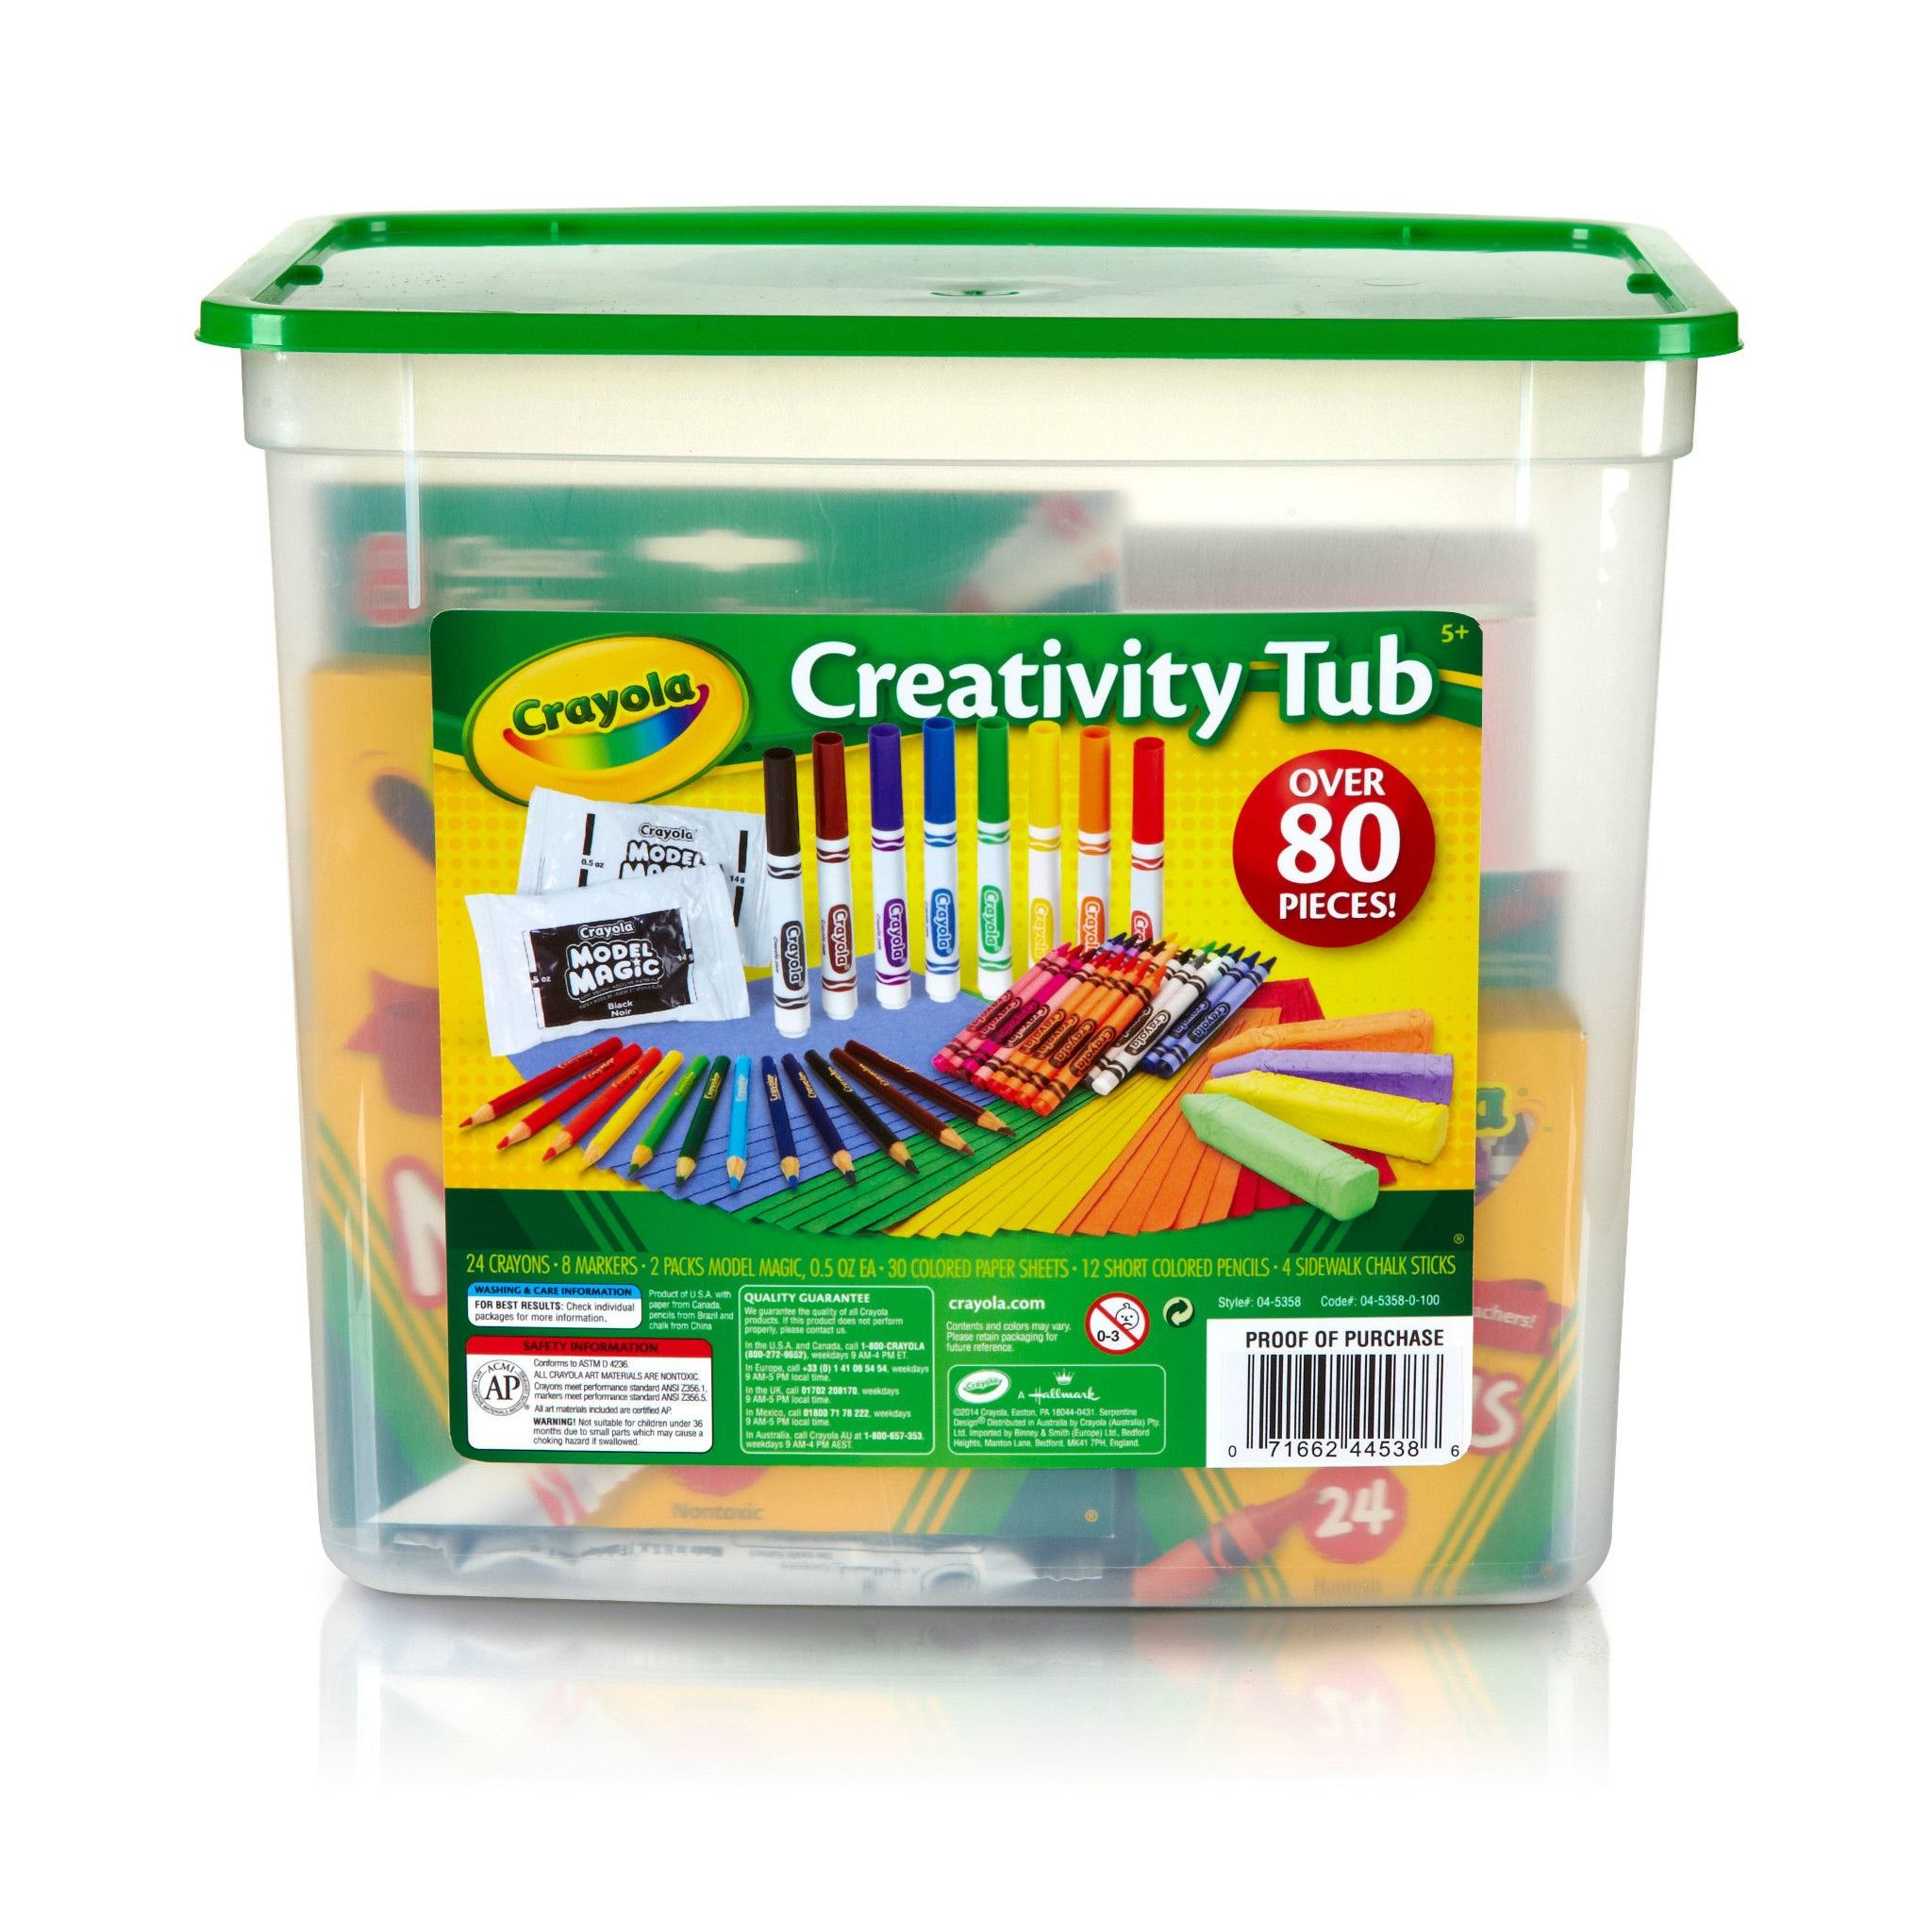 Crayola Creativity Tub Art Set, School Supplies, Ages 5+, 80 Pcs - image 5 of 8